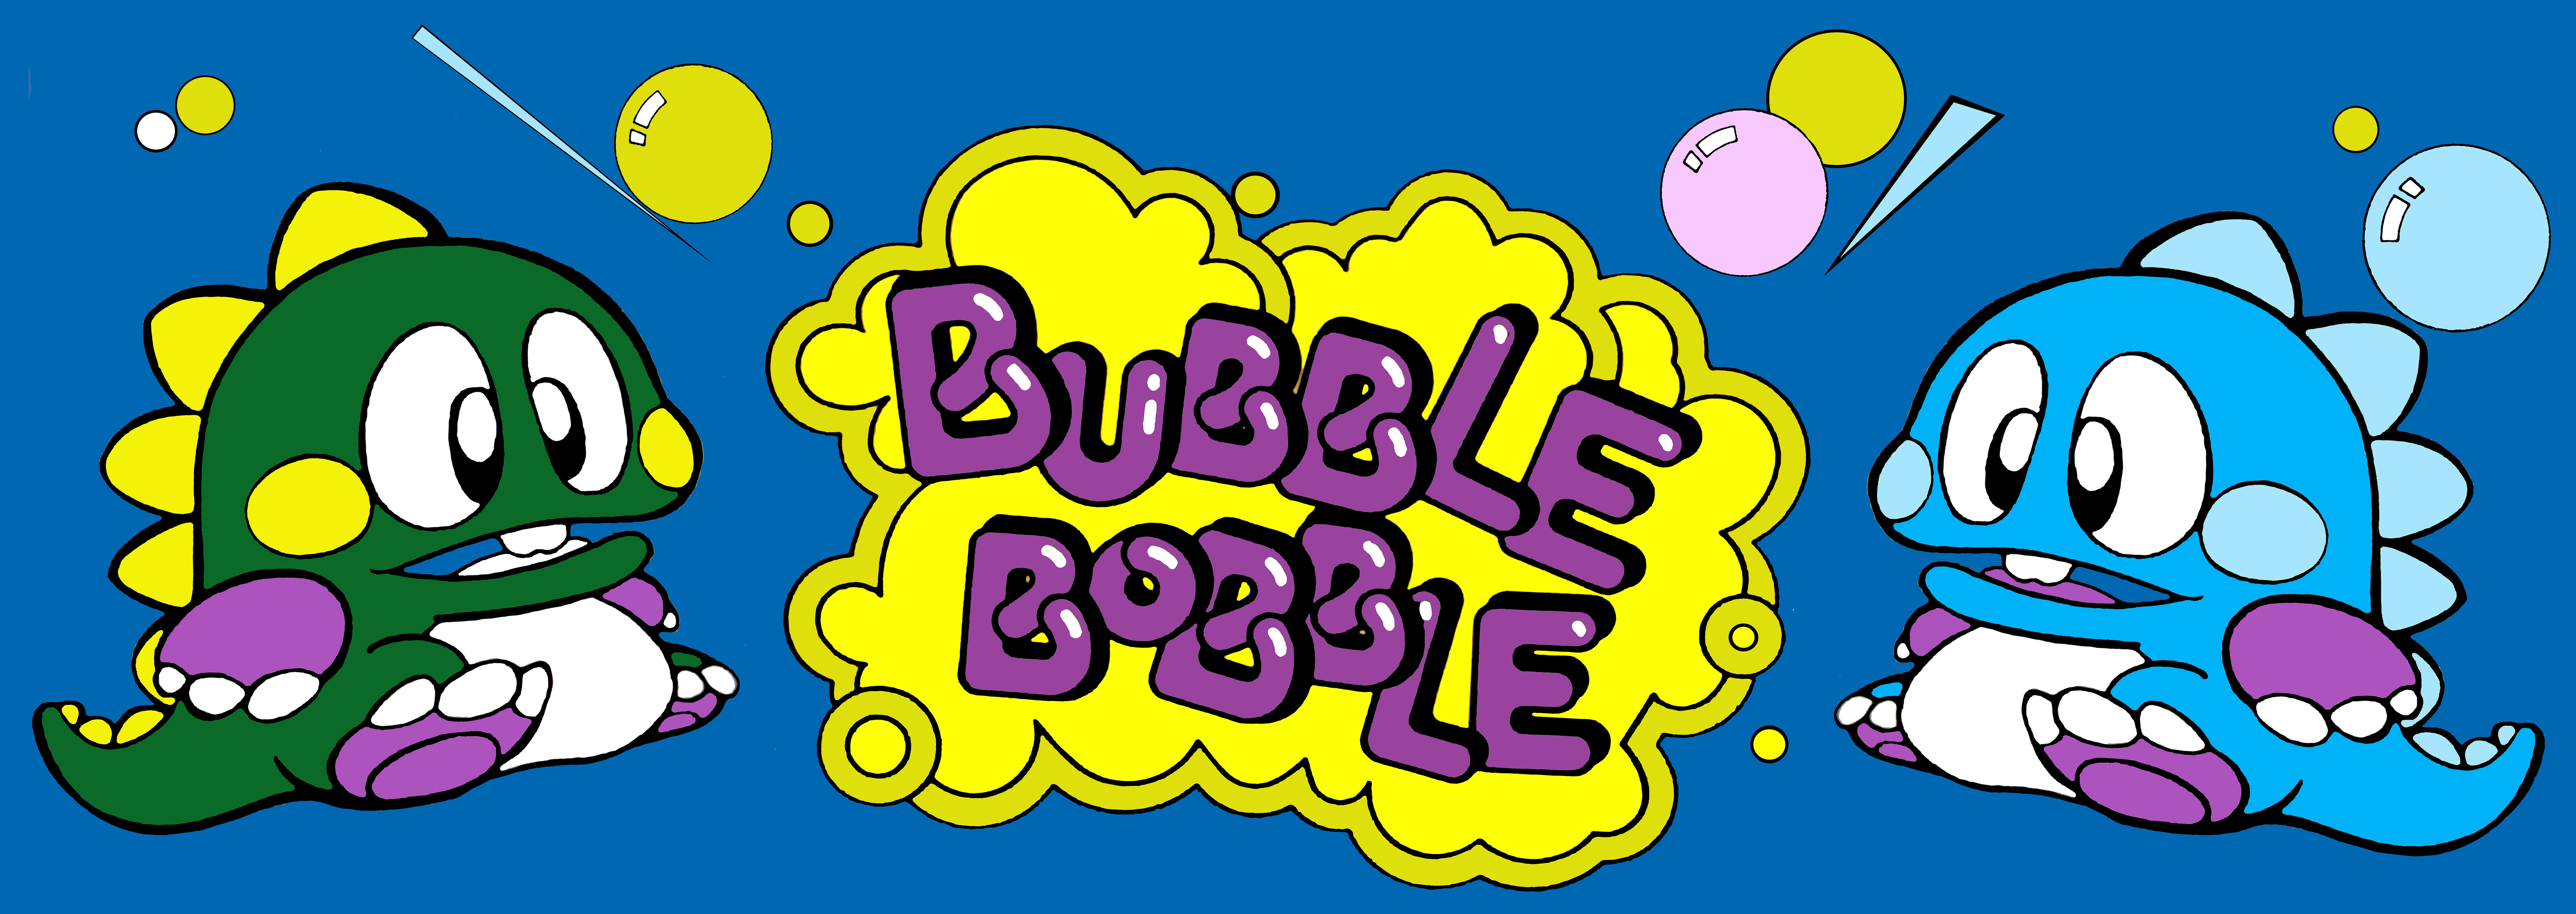 Video Game Bubble Bobble HD Wallpaper | Background Image